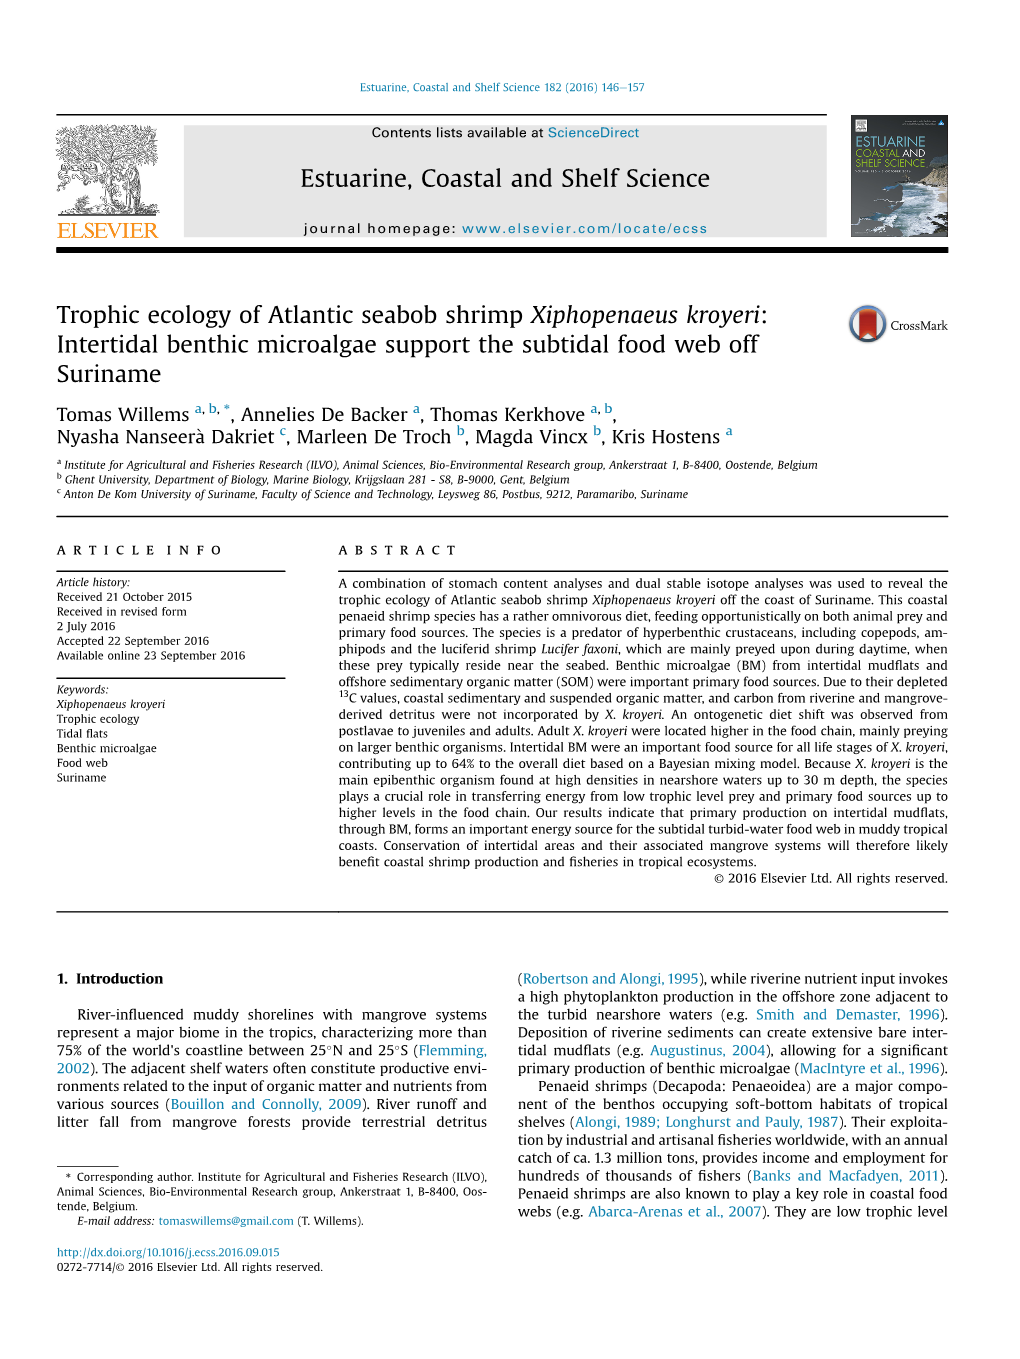 Trophic Ecology of Atlantic Seabob Shrimp Xiphopenaeus Kroyeri: Intertidal Benthic Microalgae Support the Subtidal Food Web Off Suriname